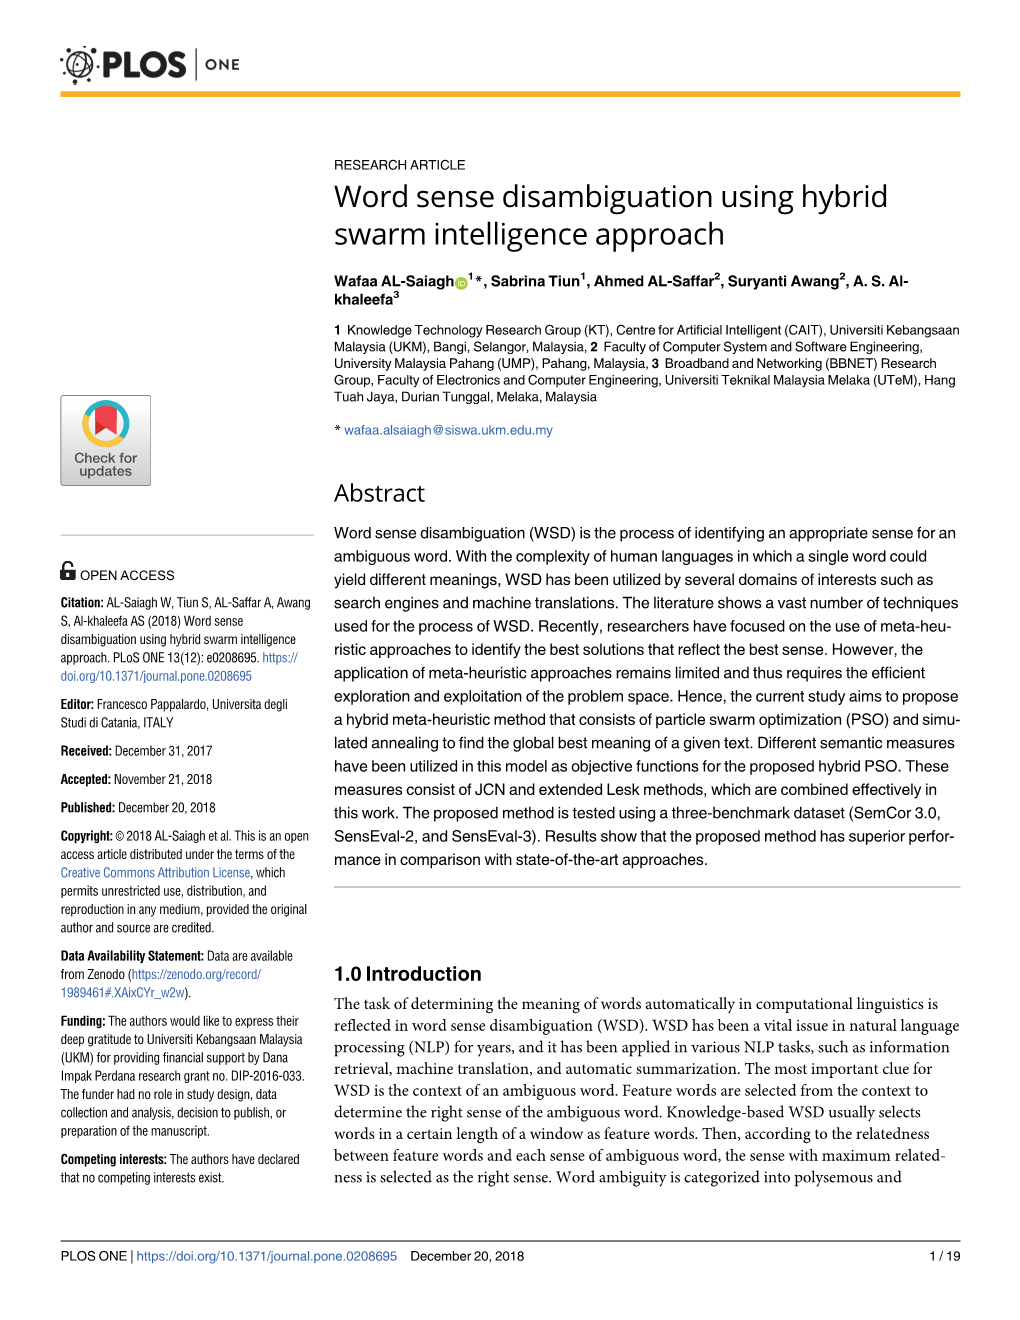 Word Sense Disambiguation Using Hybrid Swarm Intelligence Approach